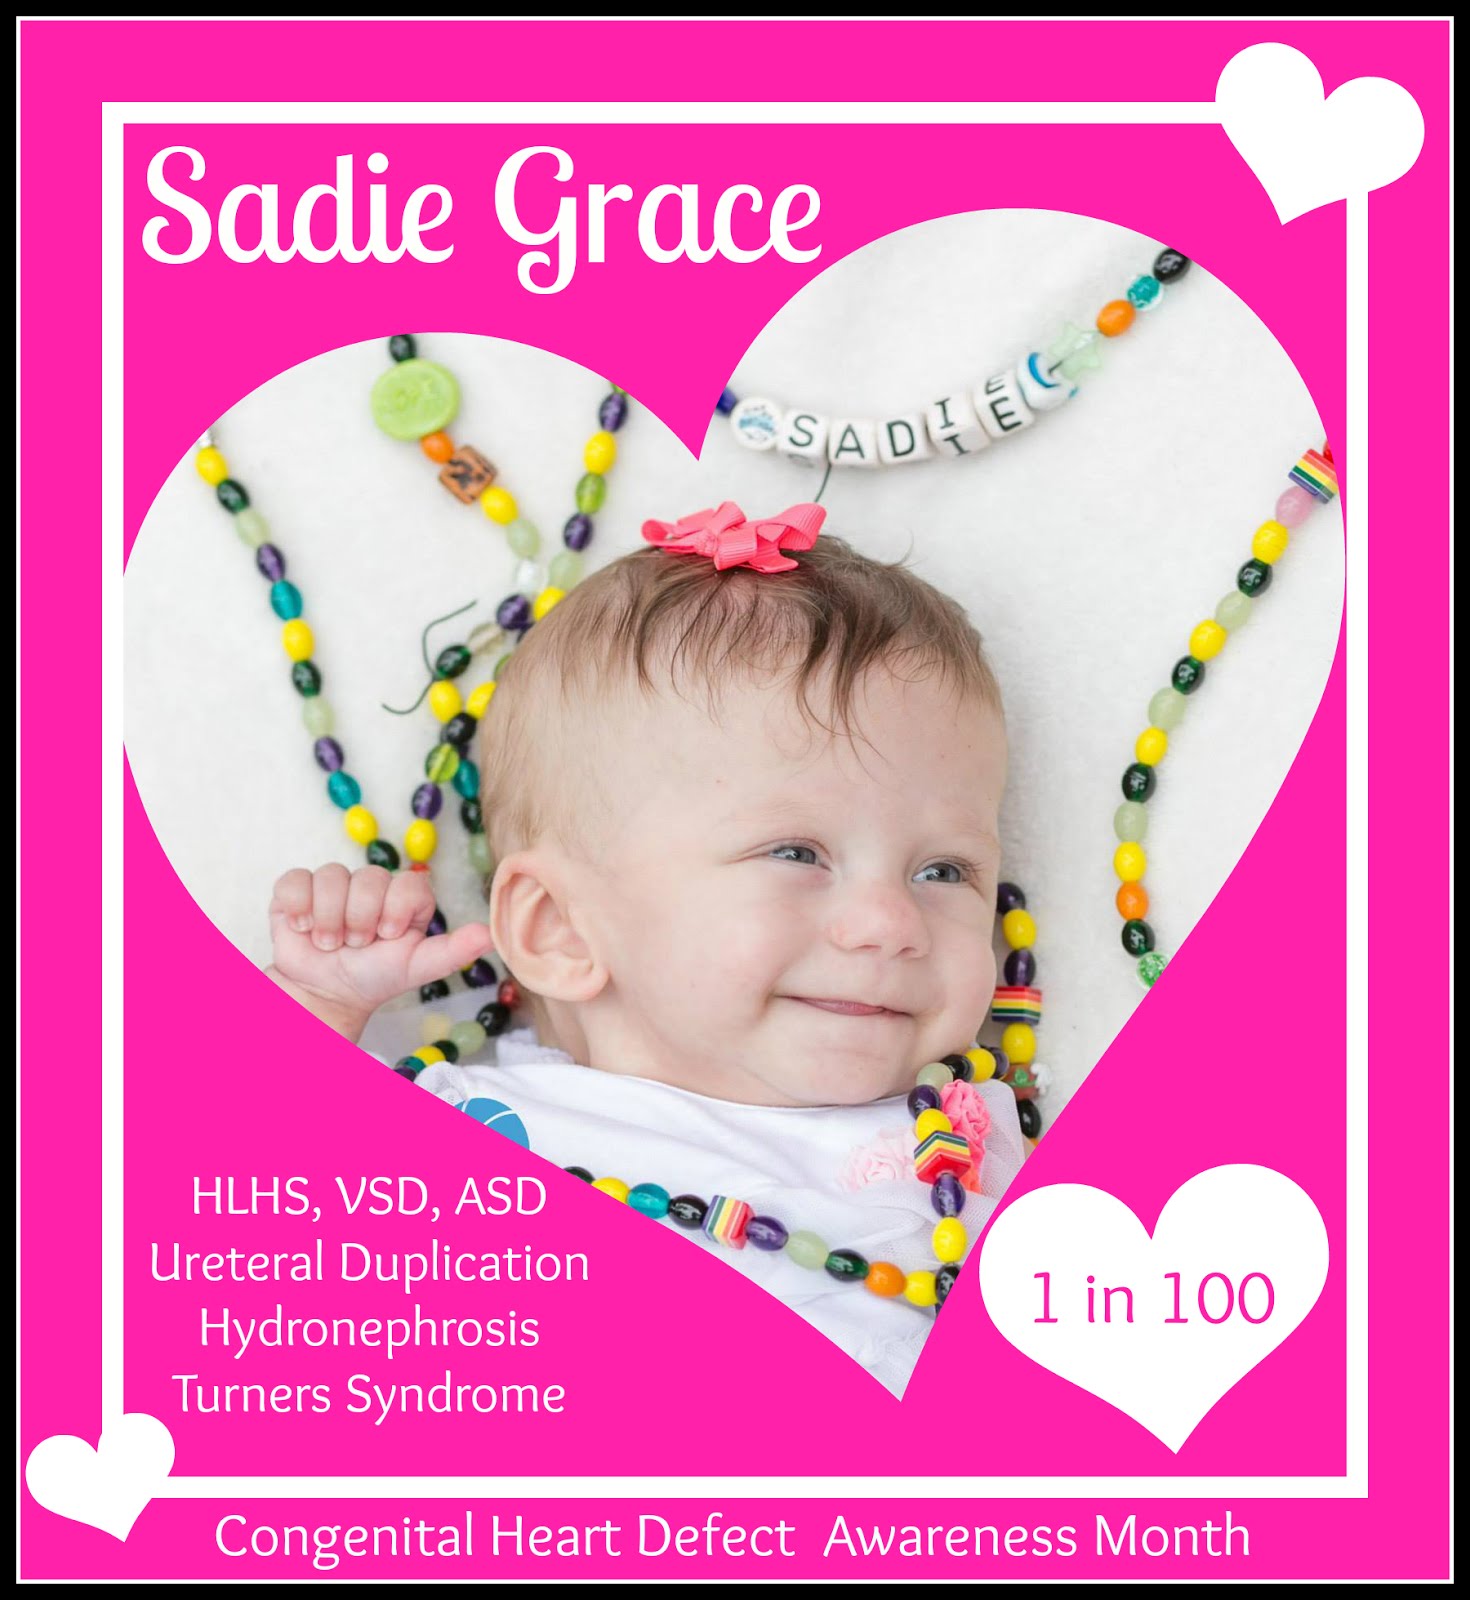 Join Team Sadie Grace